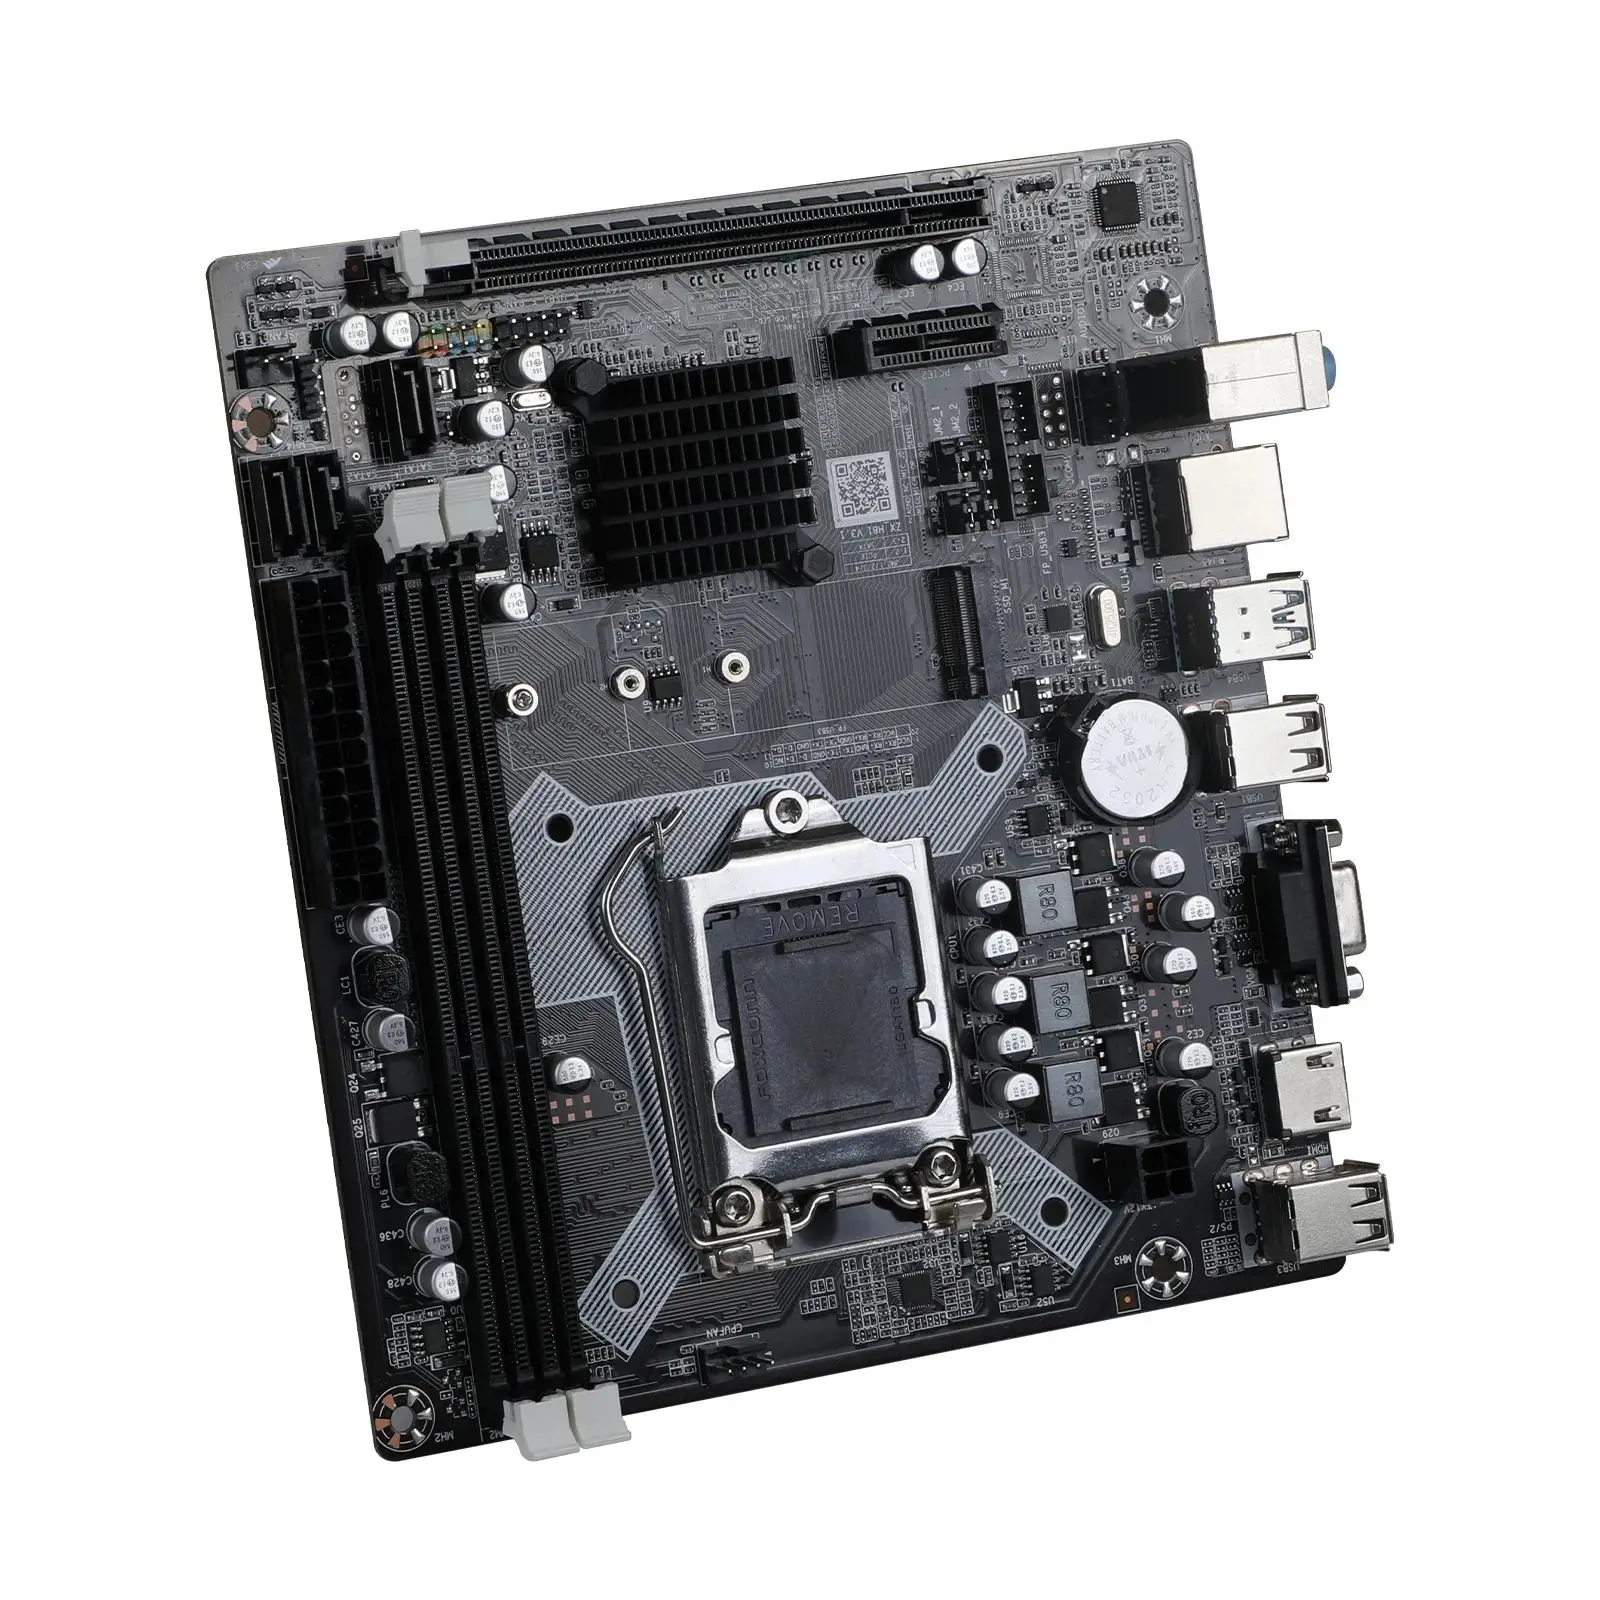 ZX-H81 Motherboard LGA 1150 Support i3 i5 Processor DDR3 RAM H81 Mainboard